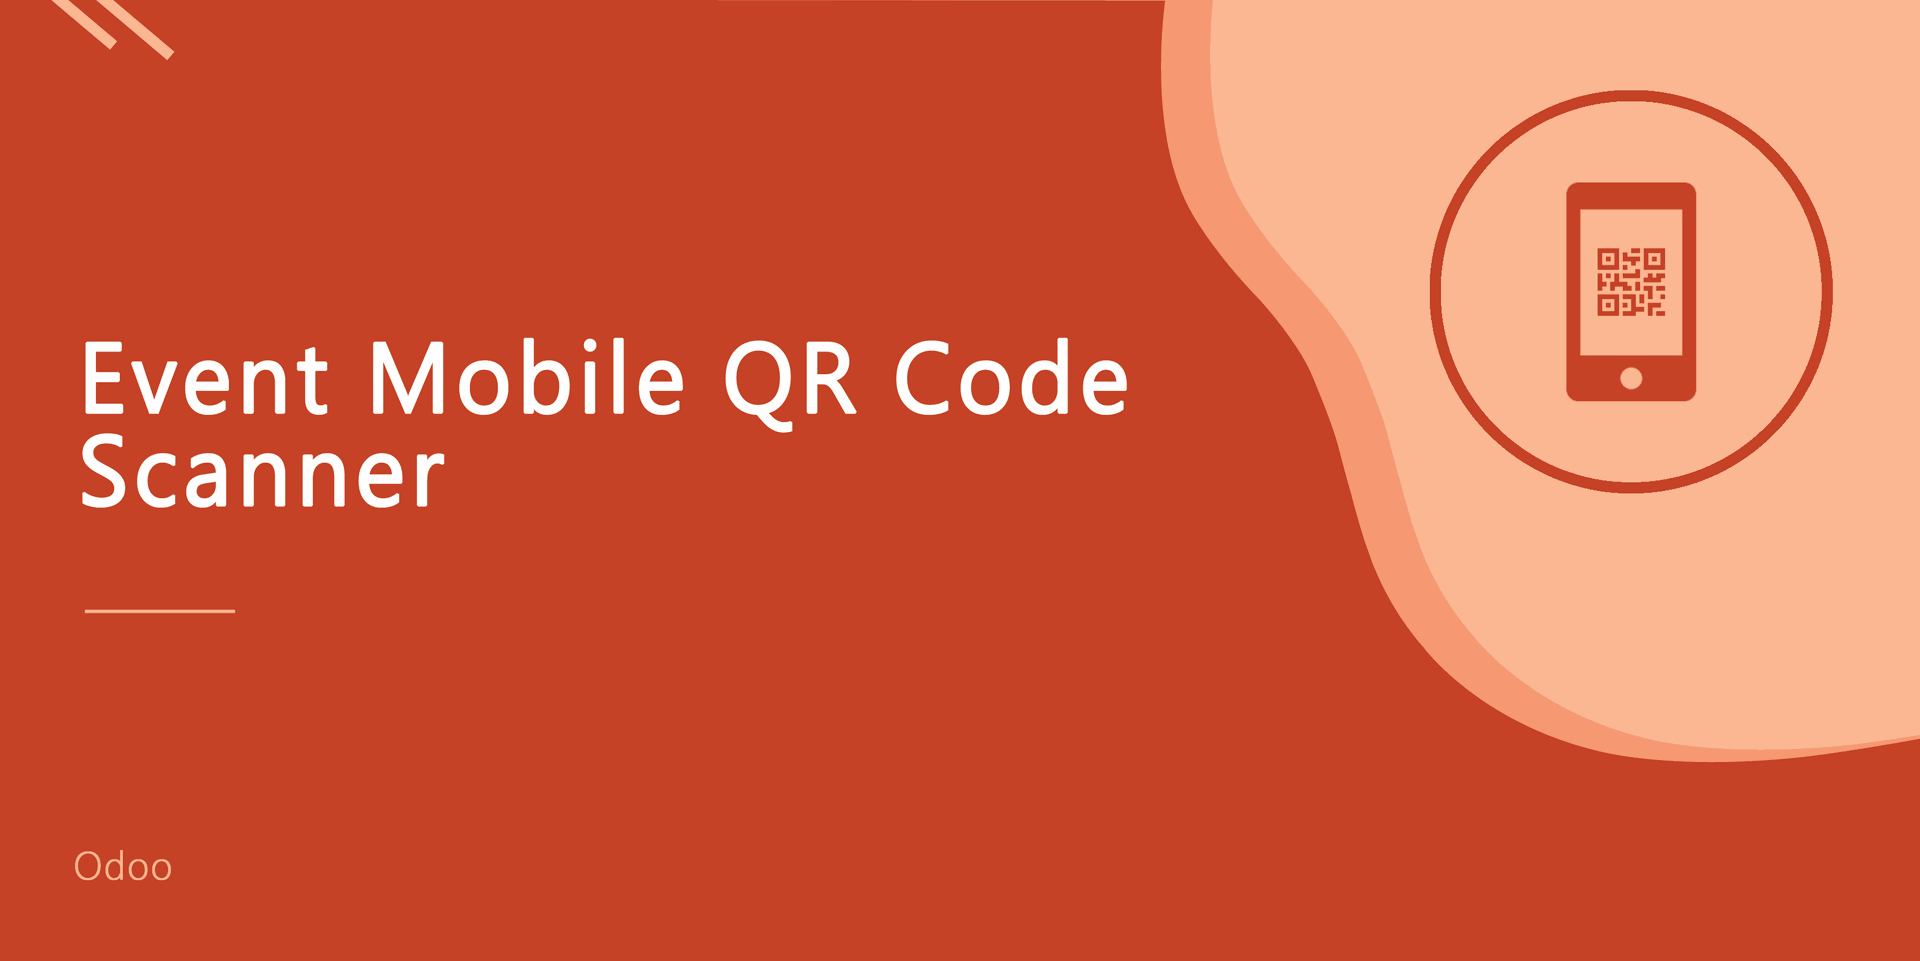 Event Mobile QR Code Scanner
